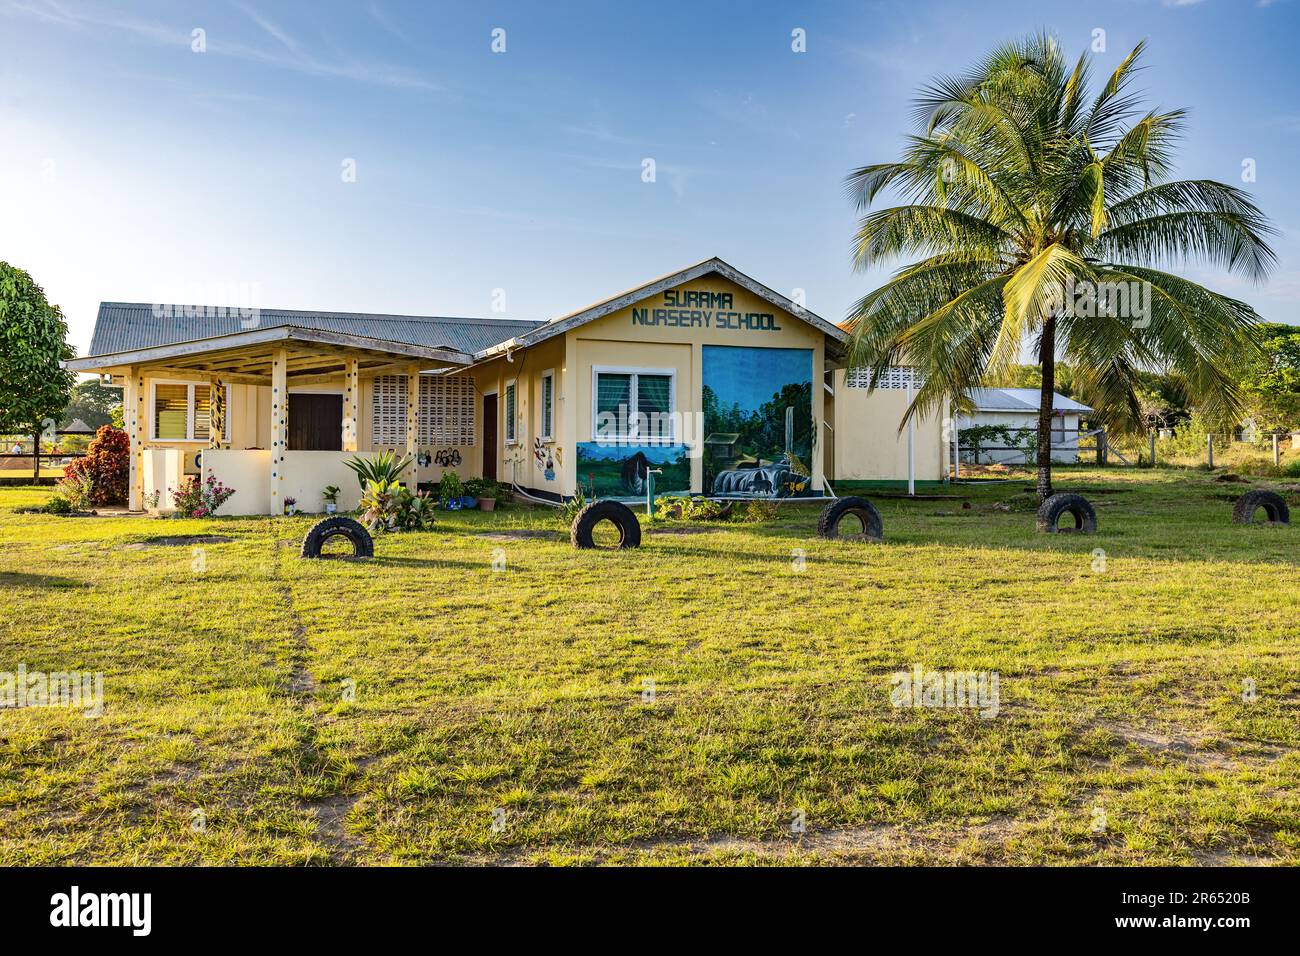 Primary/Nursery School, Surama, Amerindian village, North Rupununi, Upper Takutu-Upper Essequibo Region, Guyana Stock Photo